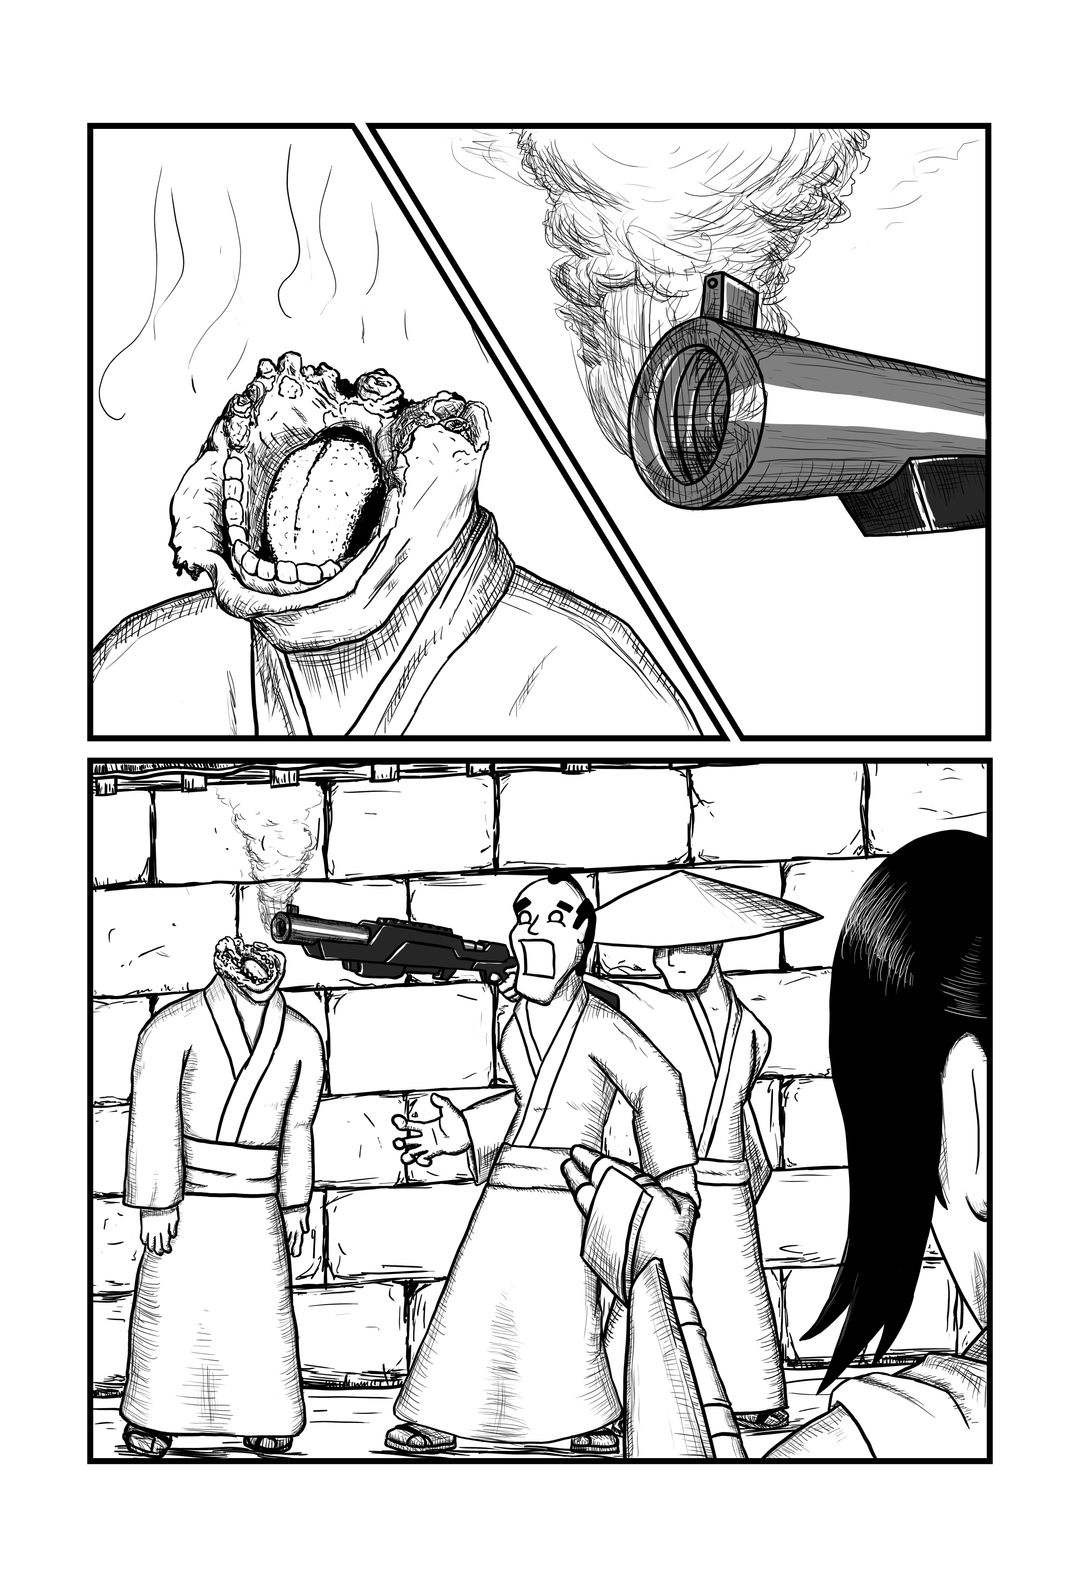 Shotgun Samurai 09 panel 4